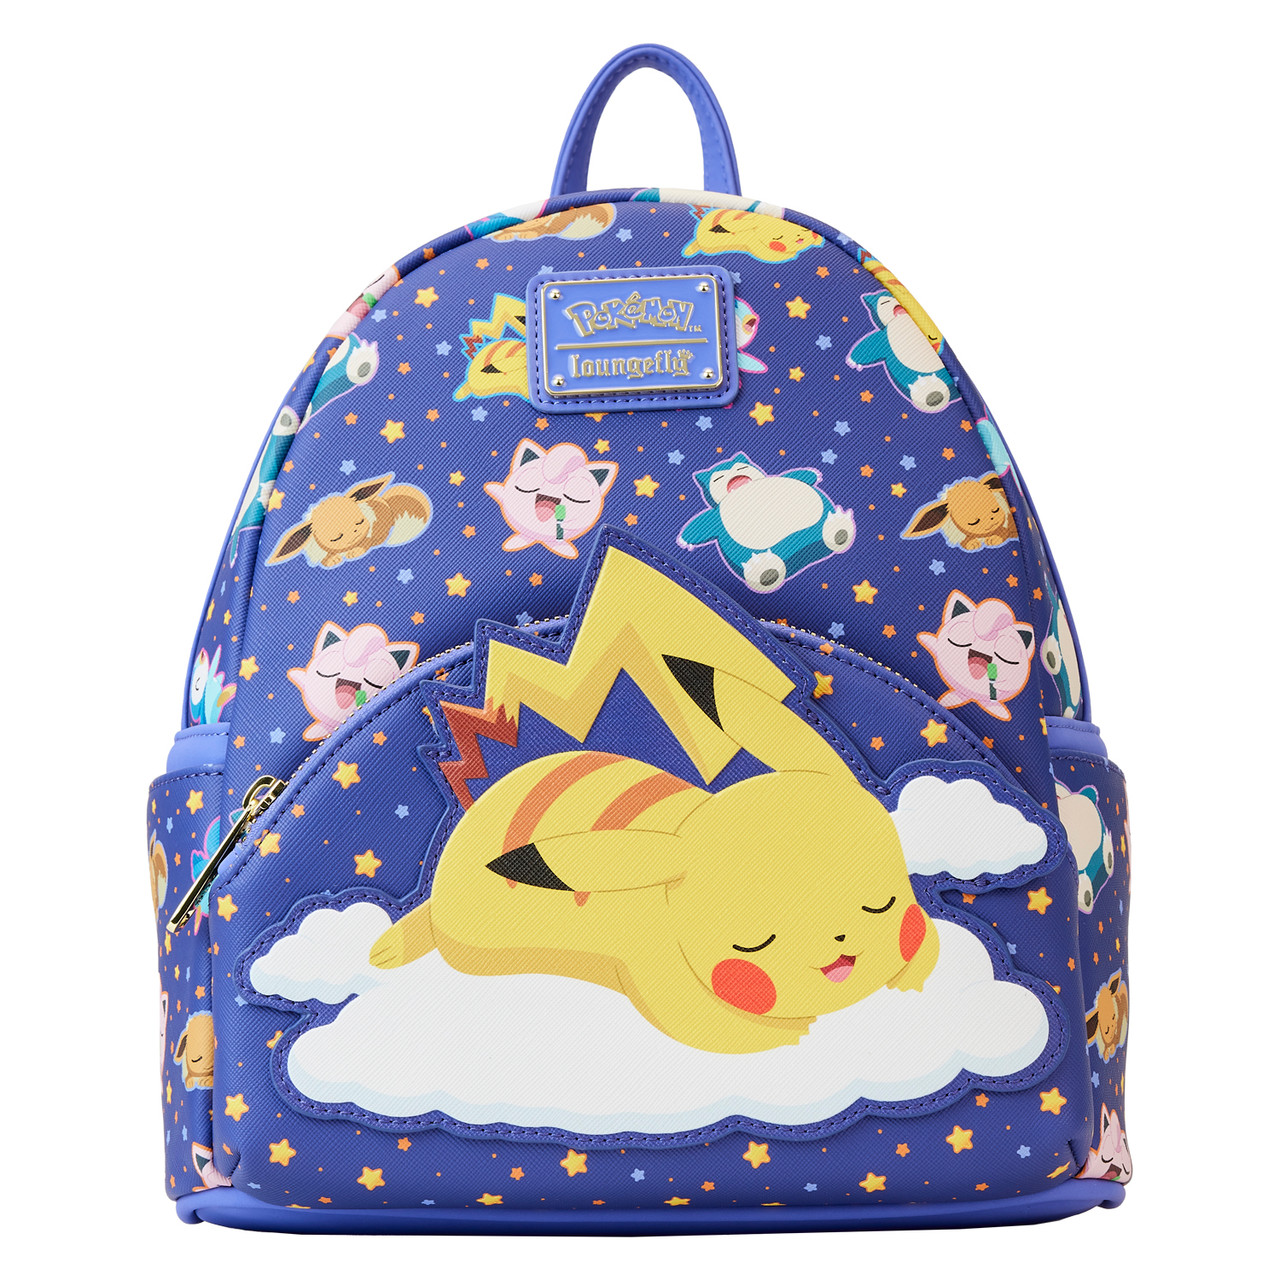 Pokemon Loungefly Bulbasaur Metallic Mini Backpack Bookbag EXCLUSIVE